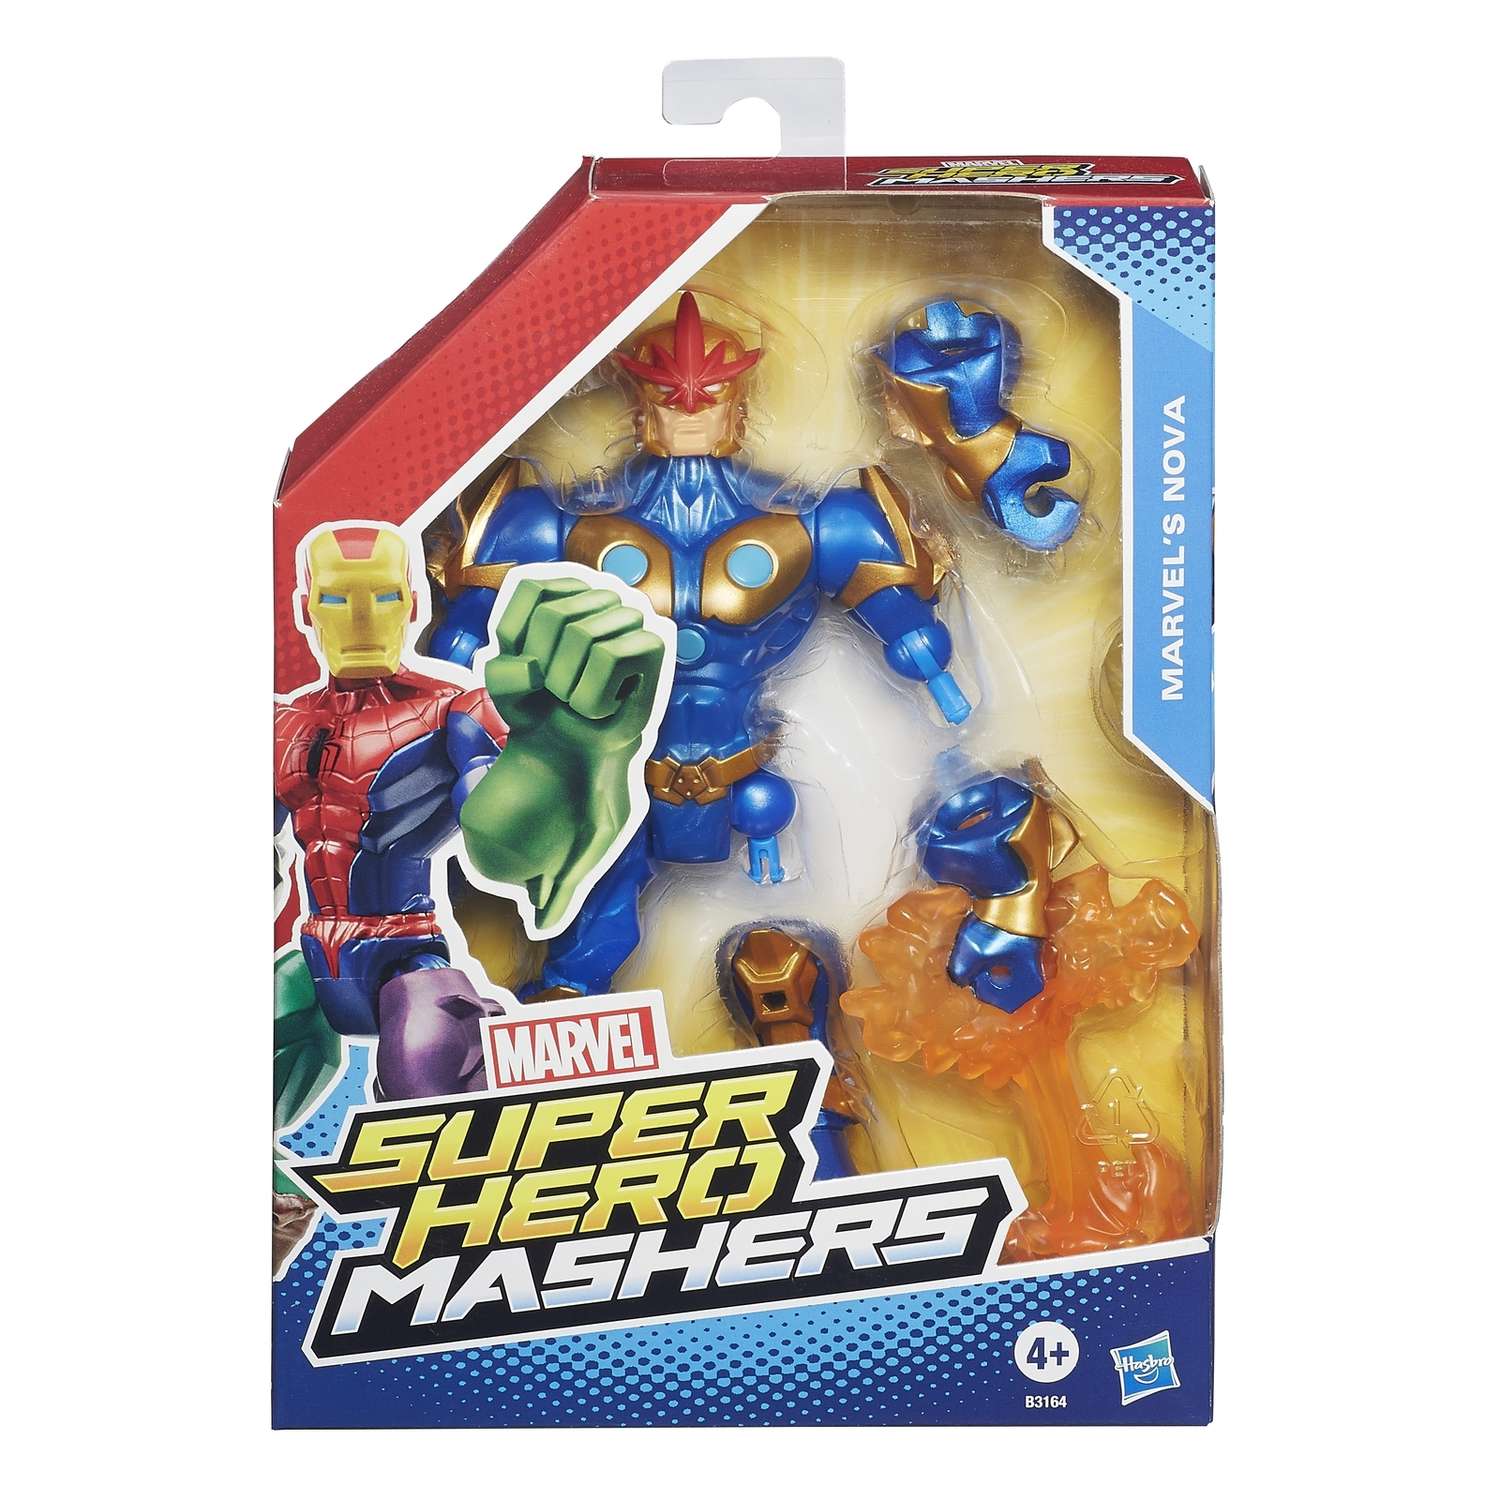 Разборные фигурки HEROMASHERS Super Hero Mashers в ассортименте - фото 70